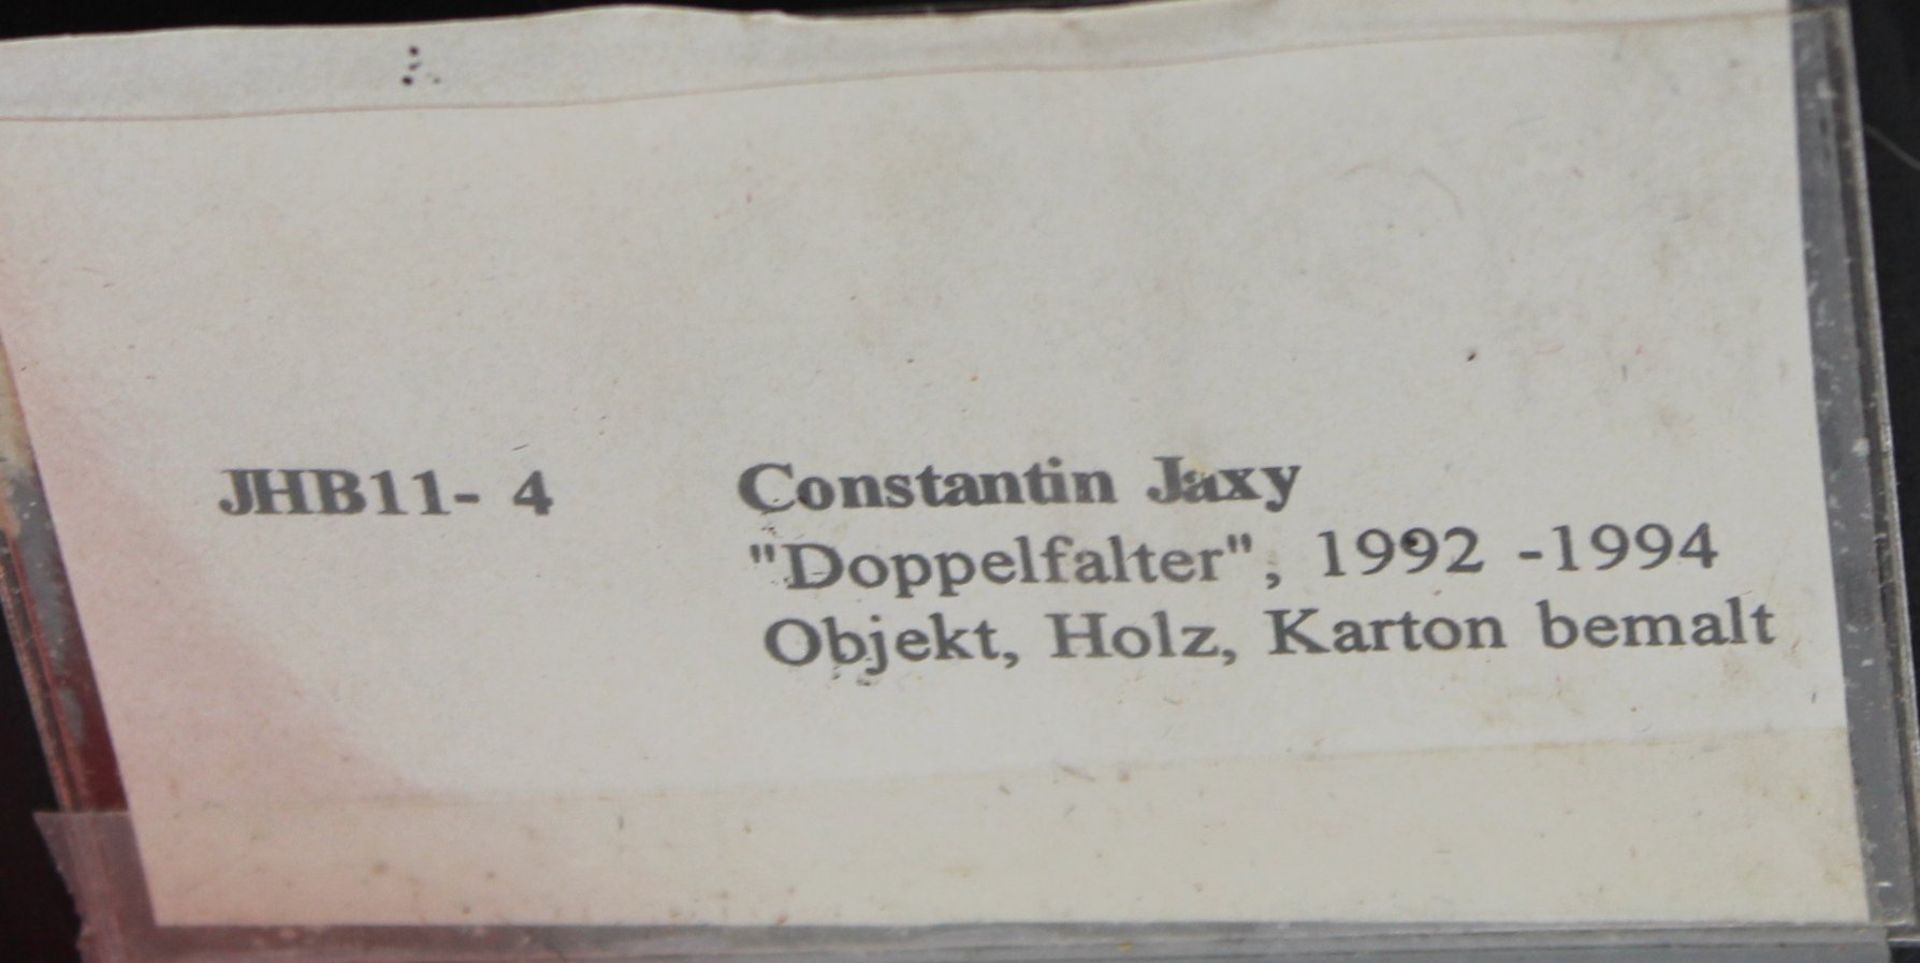 Constantin JAXY (1956) Objekt "Doppelfalter" in Schaukasten, 1992-94, ca. 48x48 cm, T-16 cm - Image 4 of 4